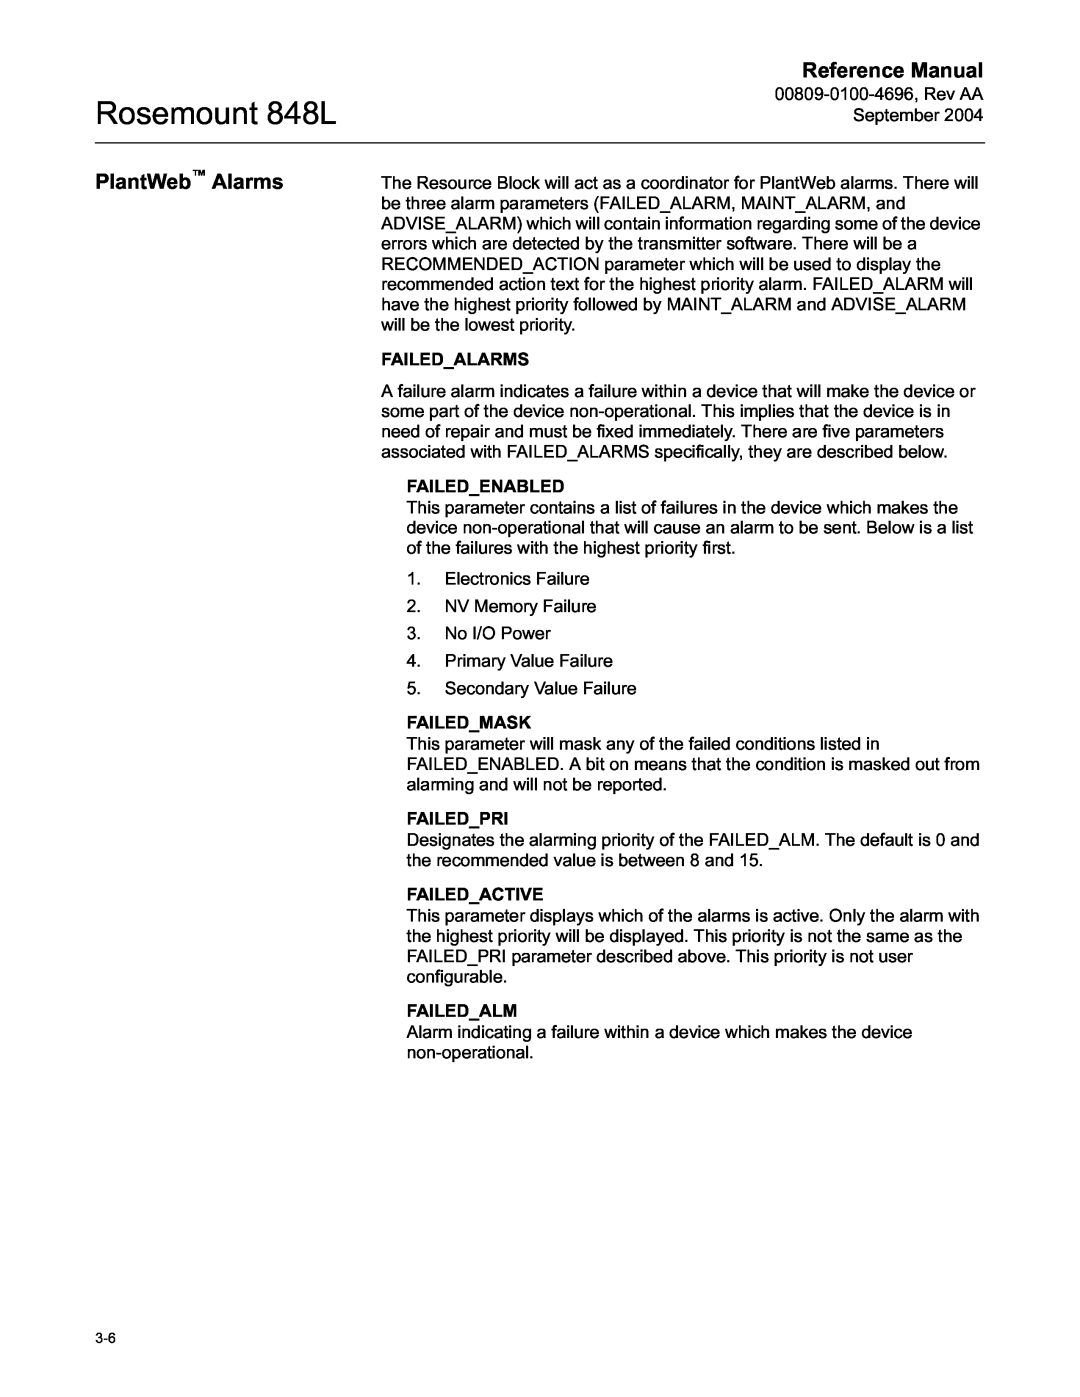 Emerson manual PlantWeb Alarms, Rosemount 848L, Reference Manual 